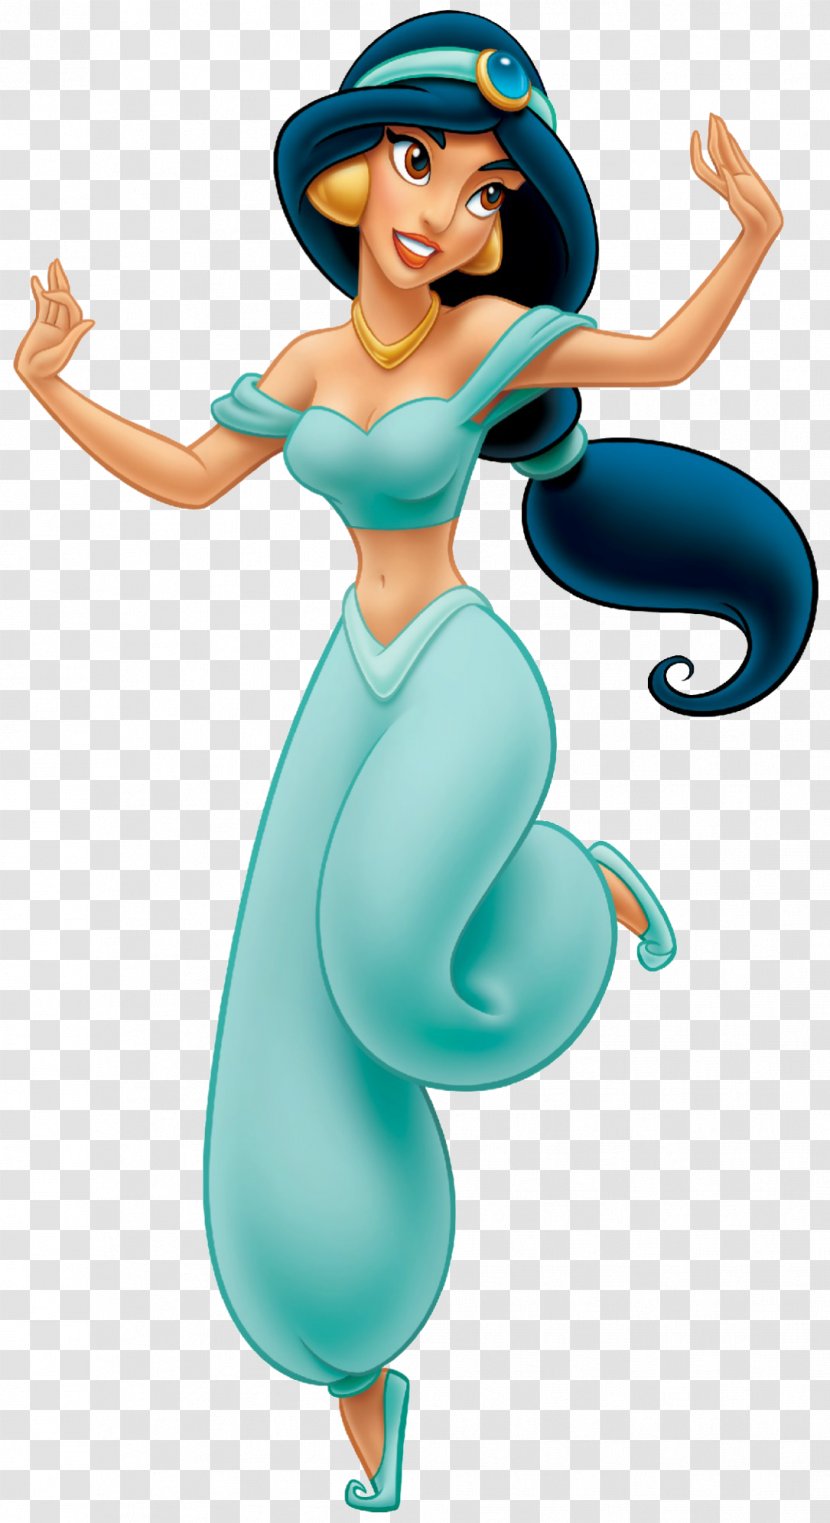 Princess Jasmine Aladdin The Sultan Disney Badroulbadour Transparent PNG